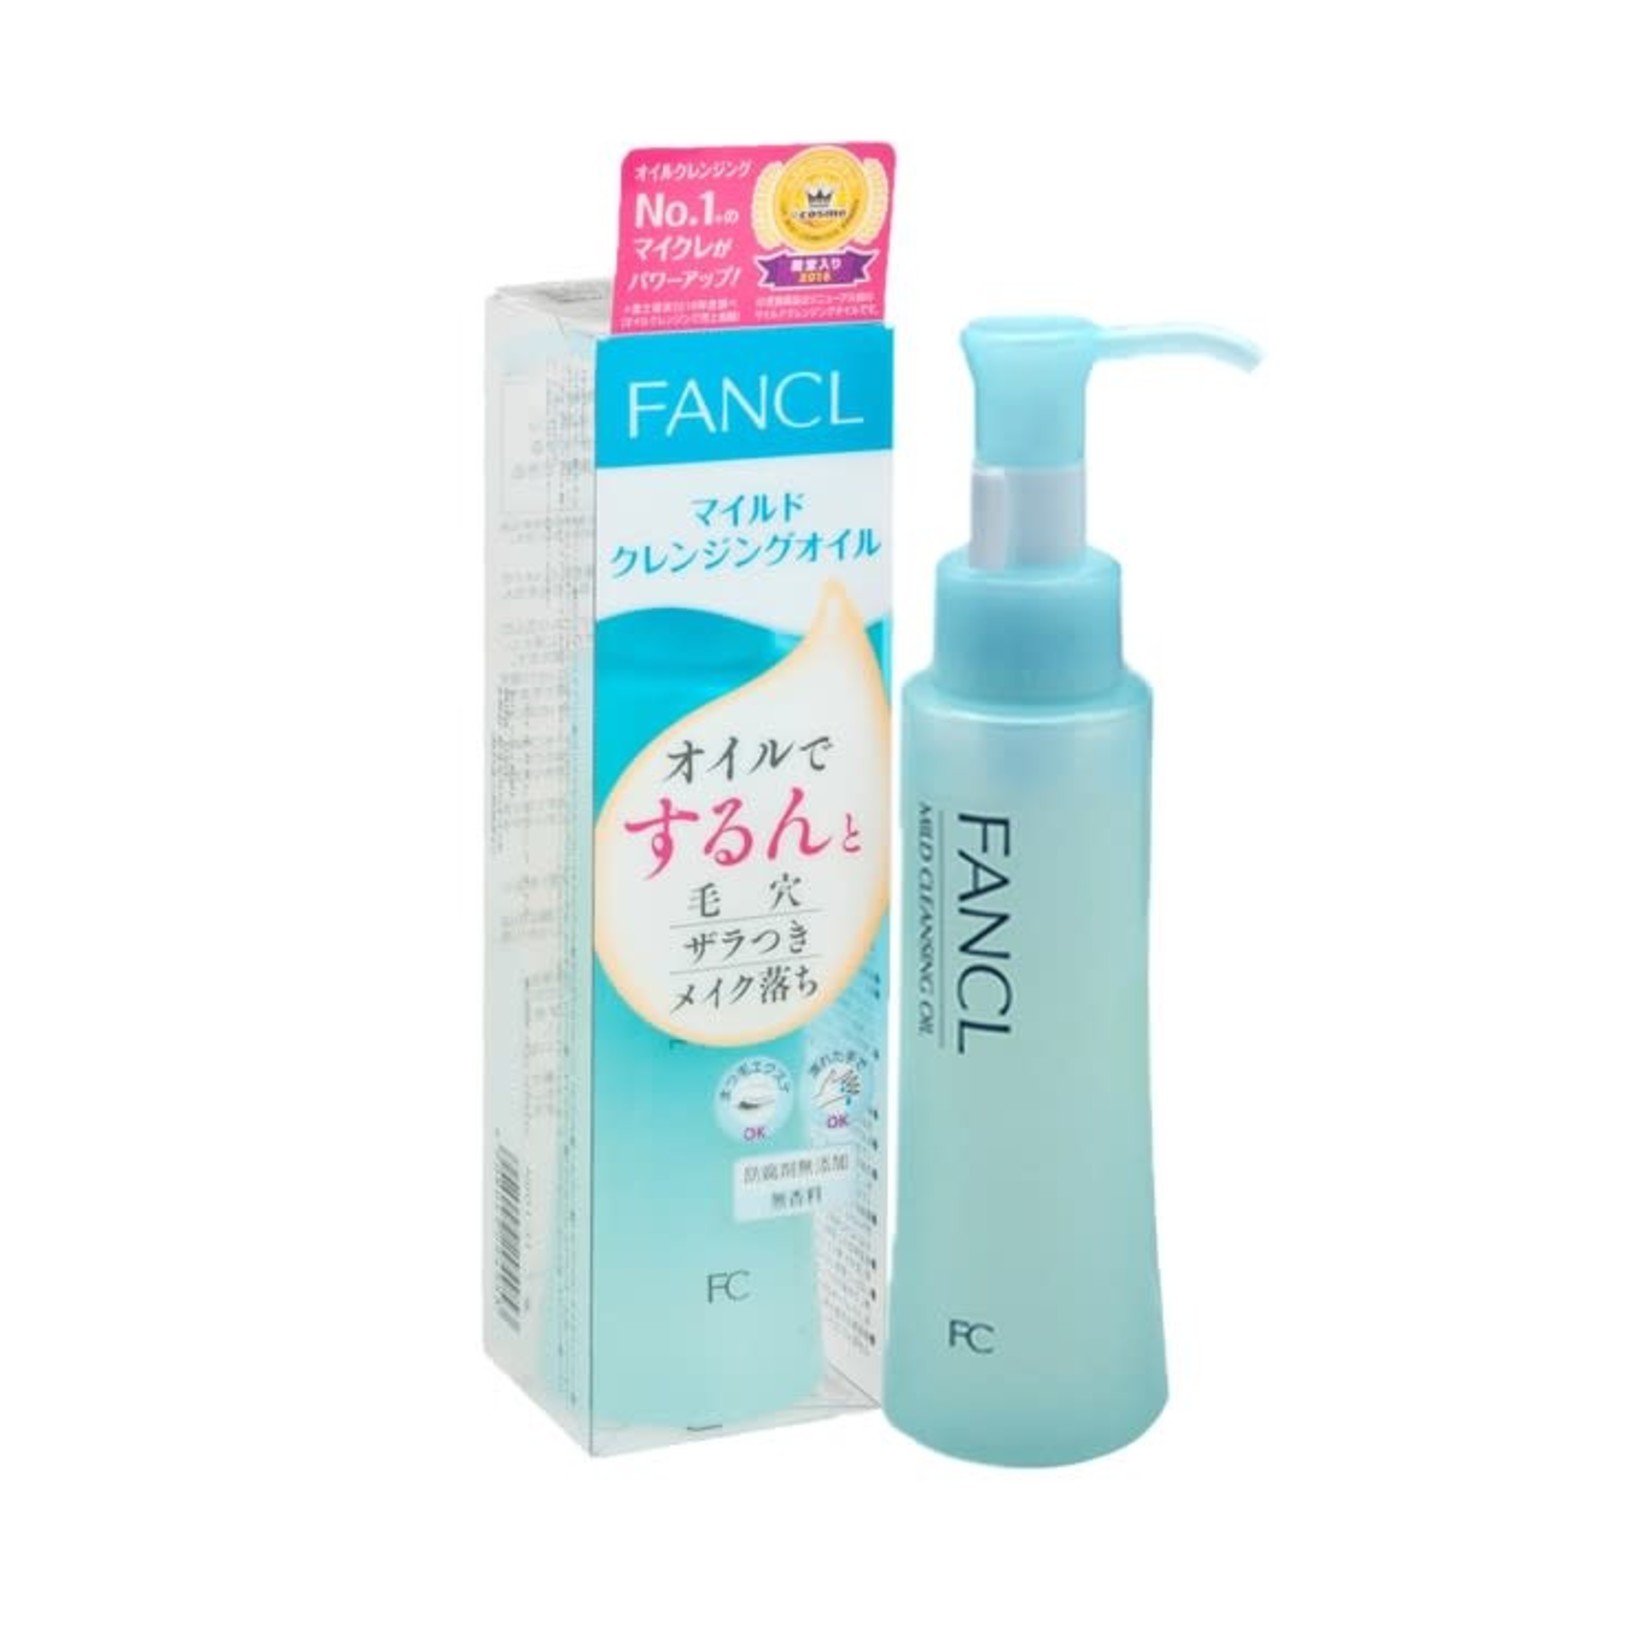 Fancl Fancl Mild Cleansing Oil 120ml